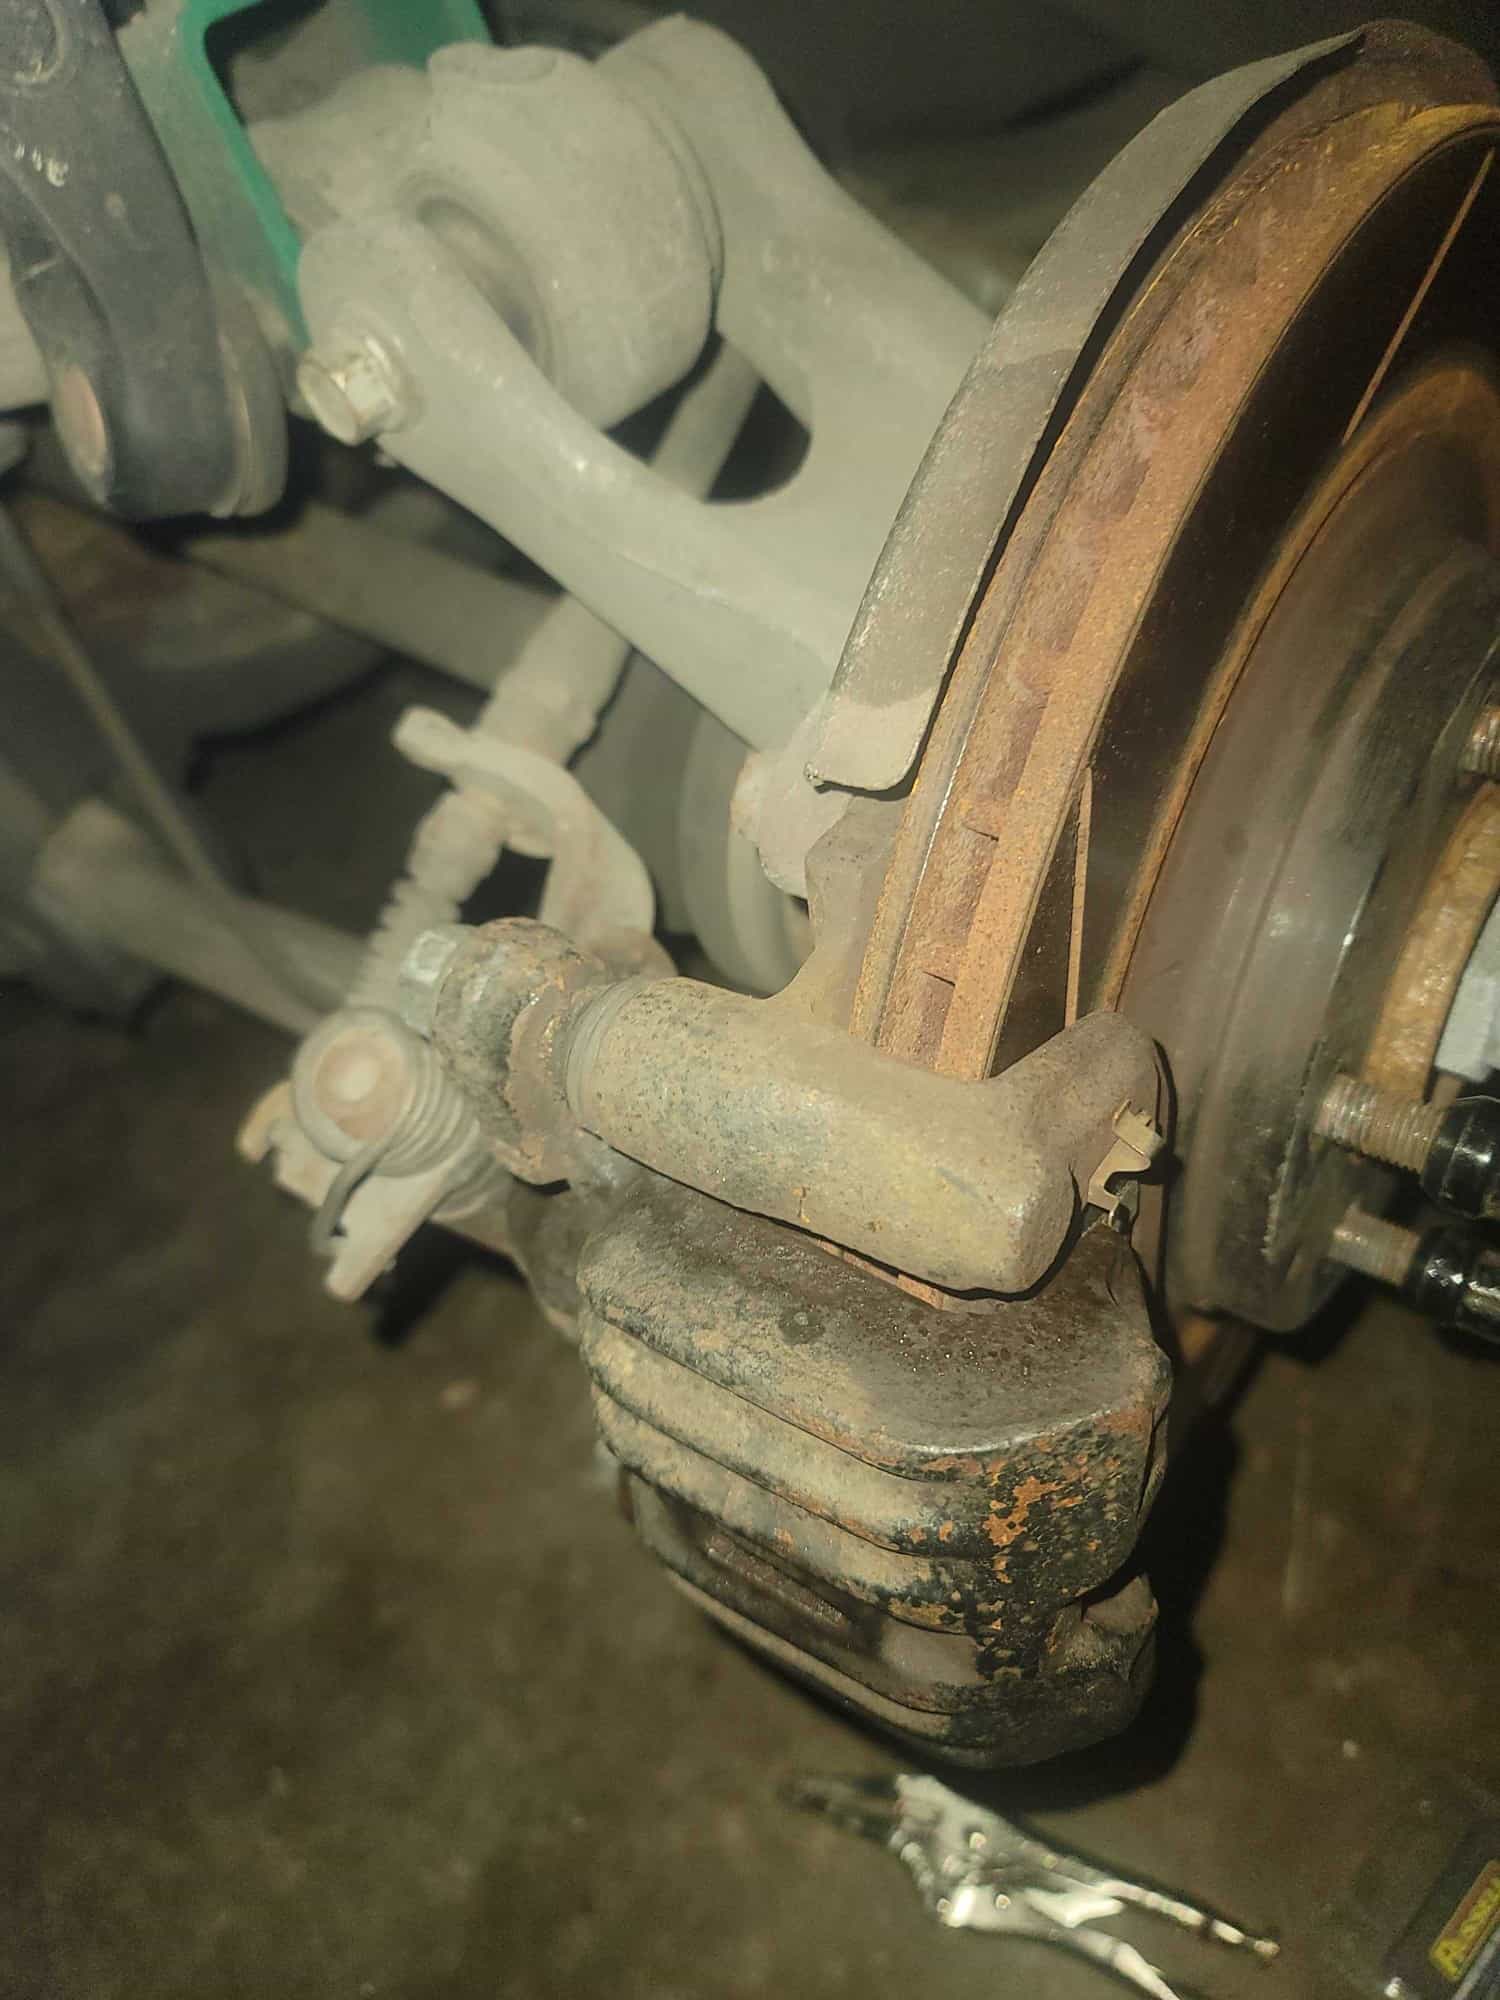 Brakes - RR brake caliper body - Used - 1993 Mazda RX-7 - Bloomington, IL 61701, United States